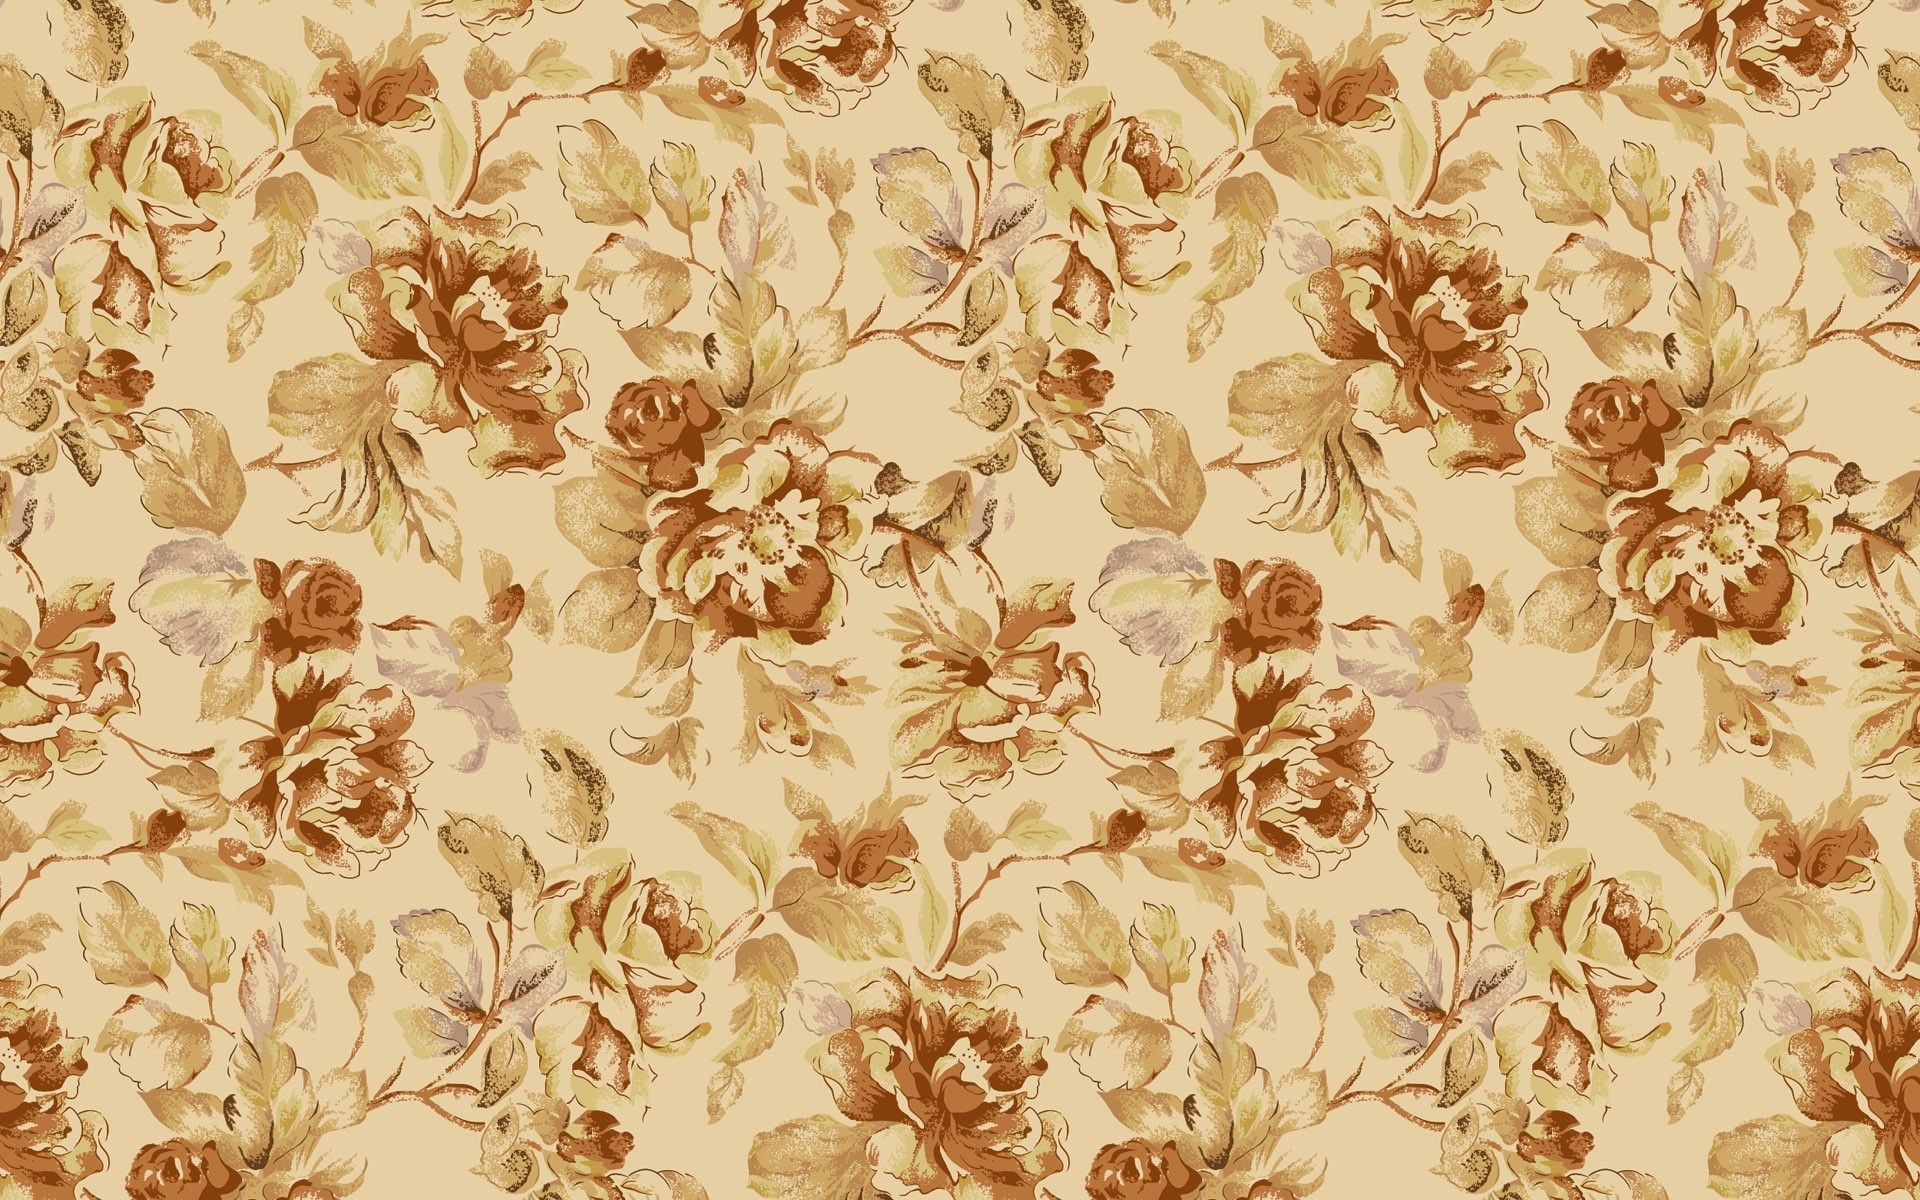 Floral Vintage Wallpaper in PSD .freecreatives.com